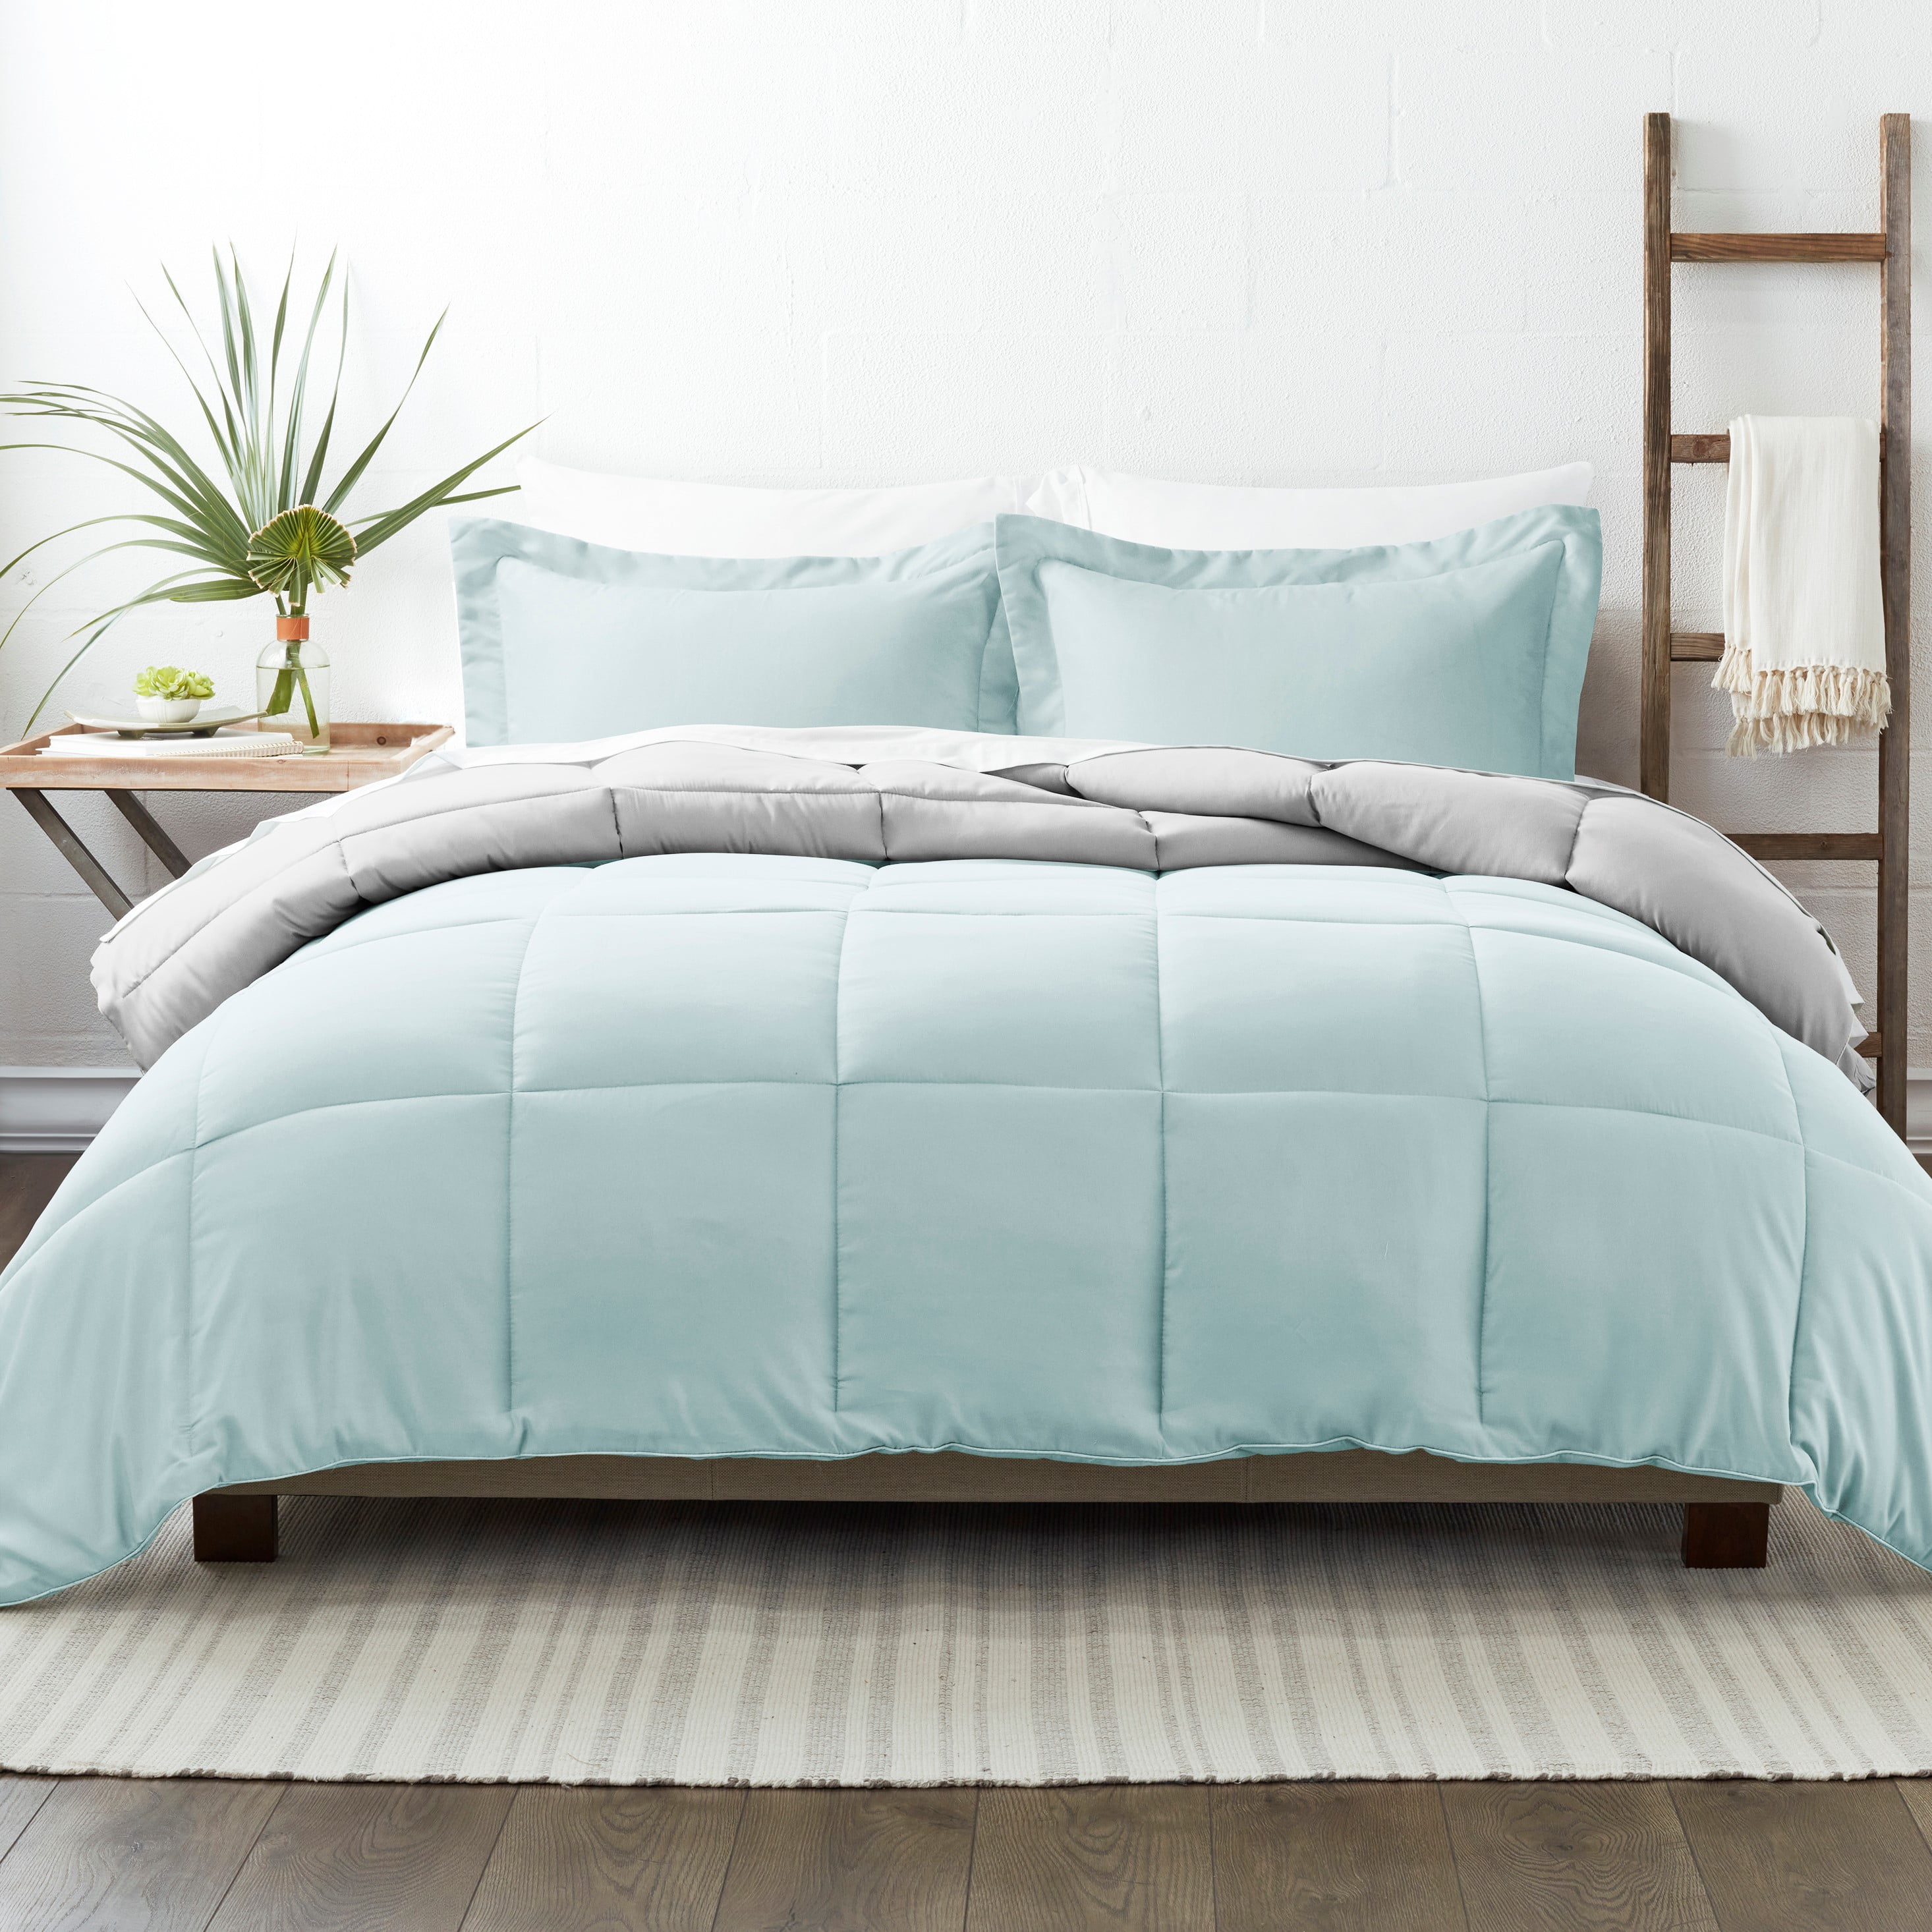 Home Linen Down Alternative Comforter 200 GSM Aqua Blue Striped Queen Size 